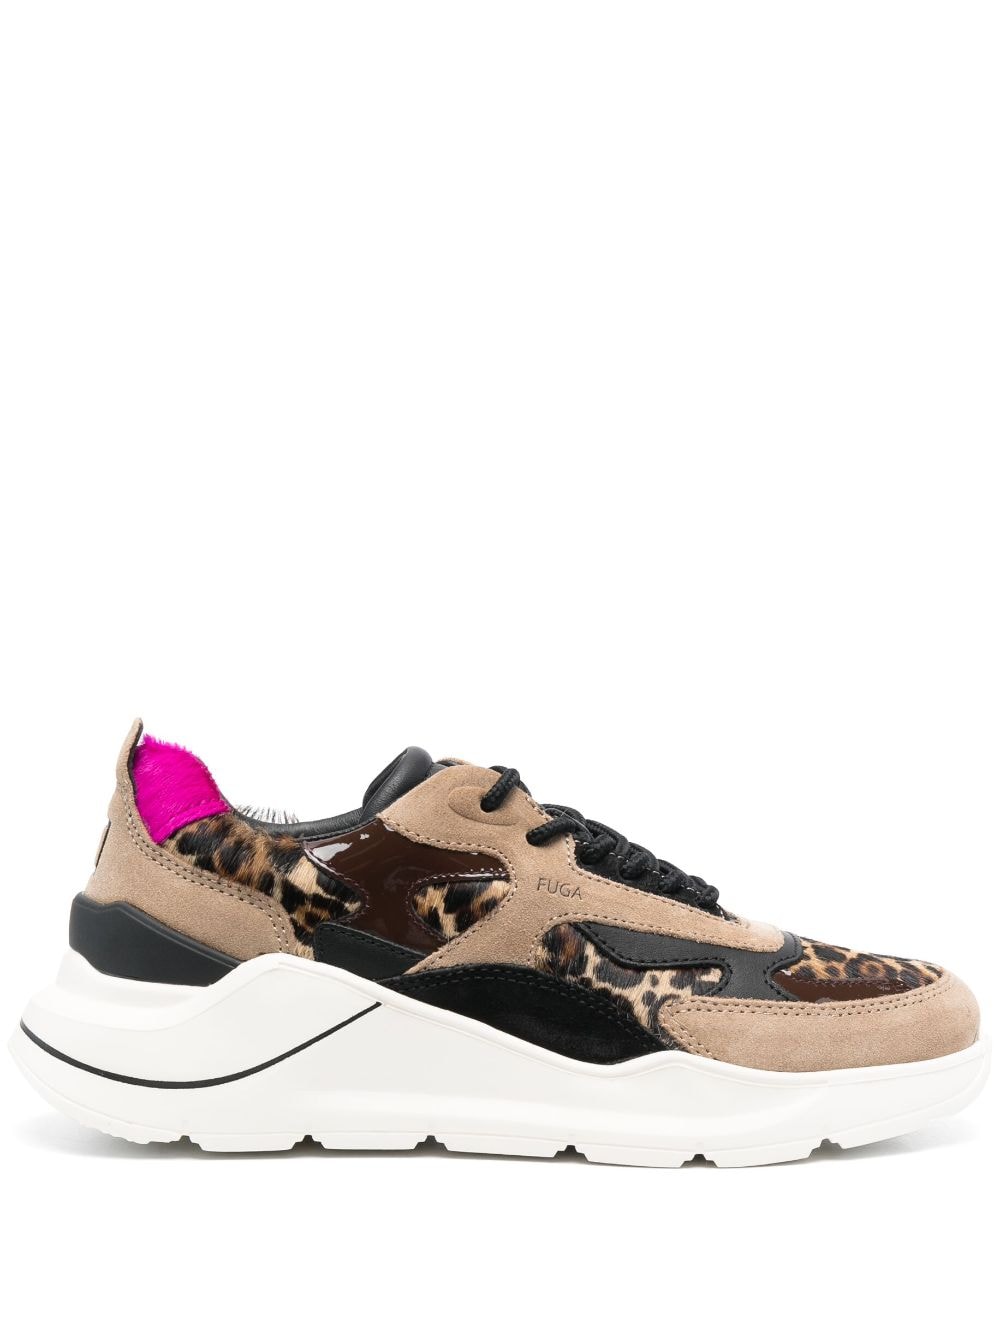 Fuga leopard-print sneakers